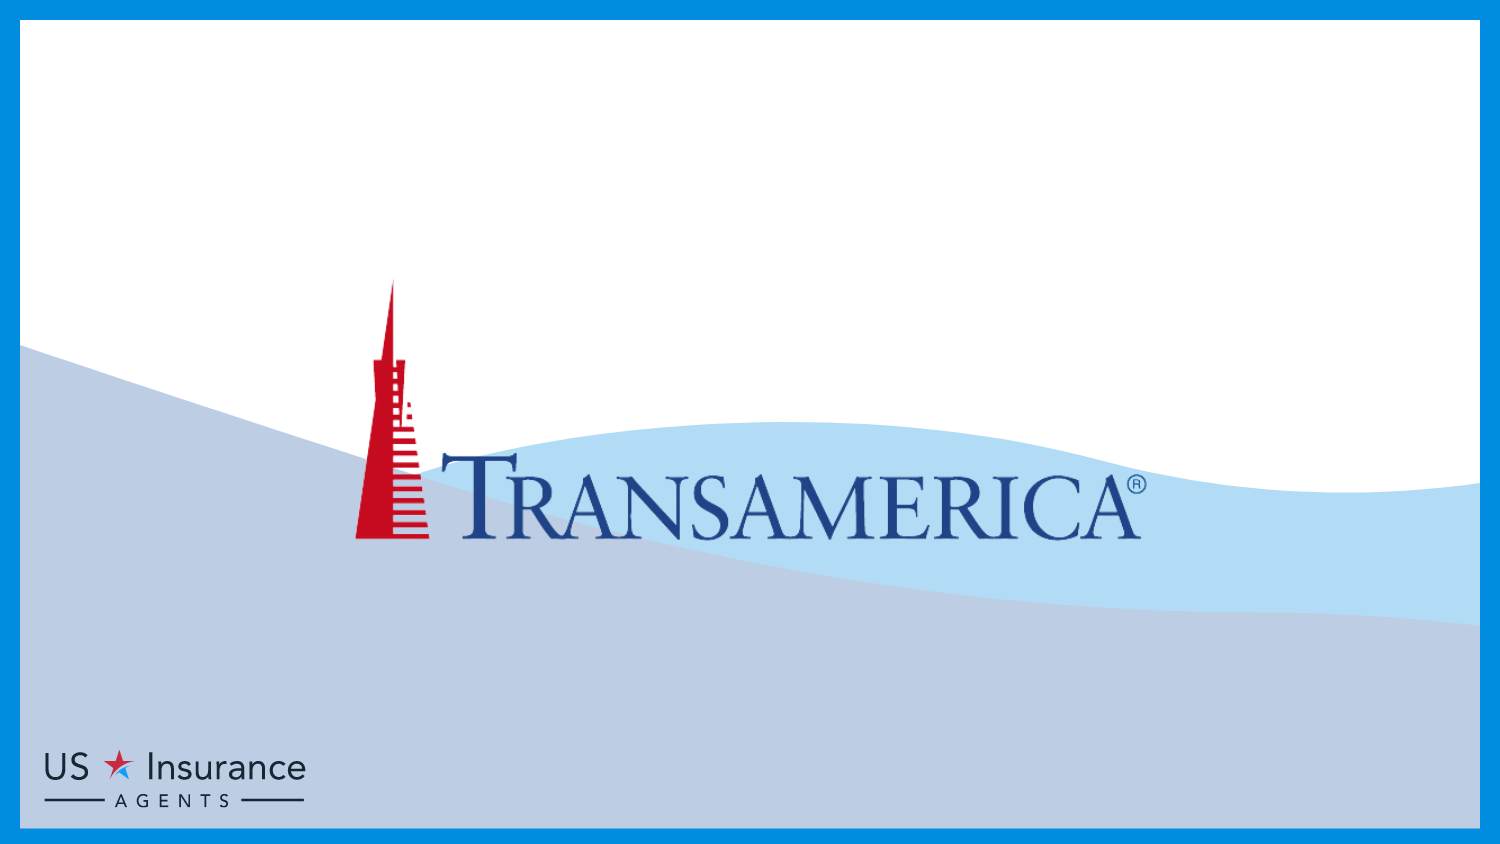 Transamerica: Best Life Insurance for Kidney Transplant Patients